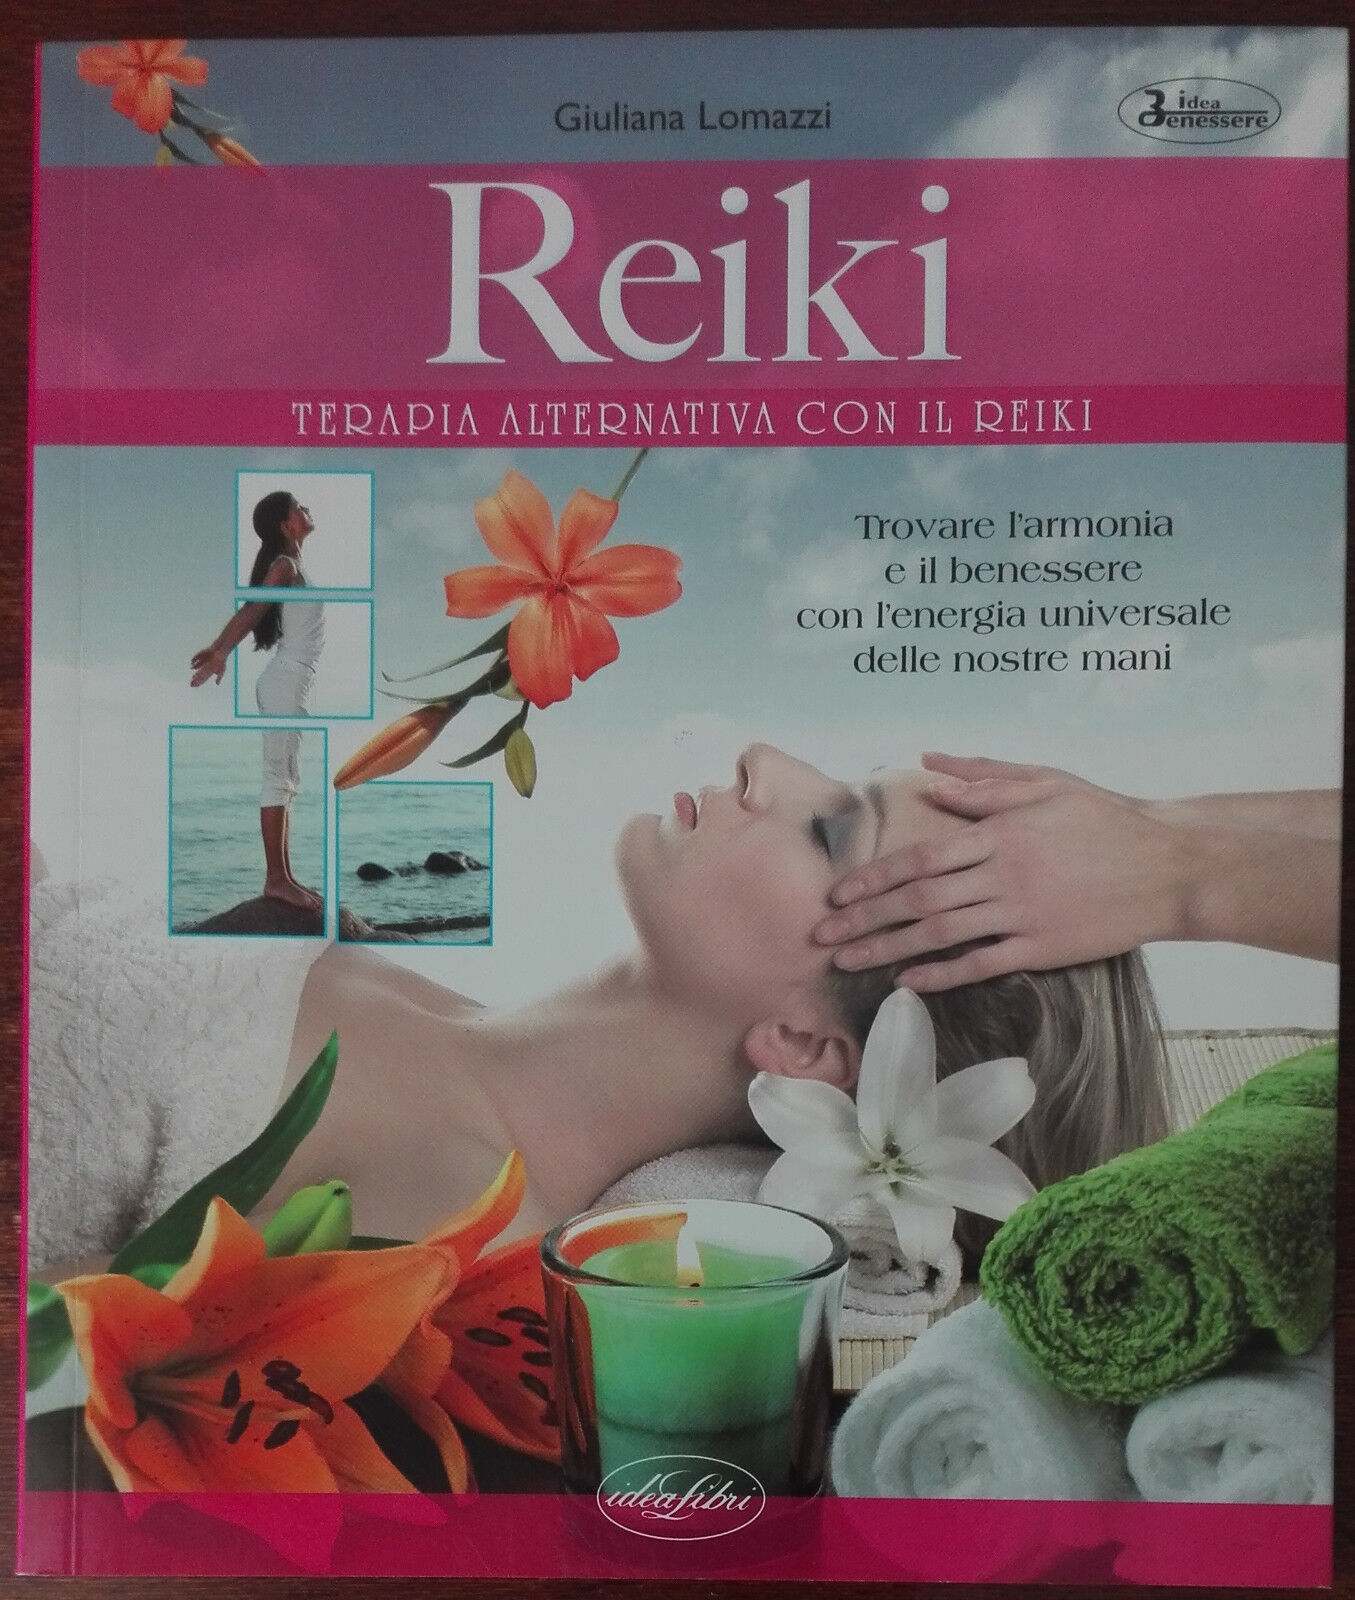 Reiki - Giuliana Lomazzi - Idea Libri,2011 - A